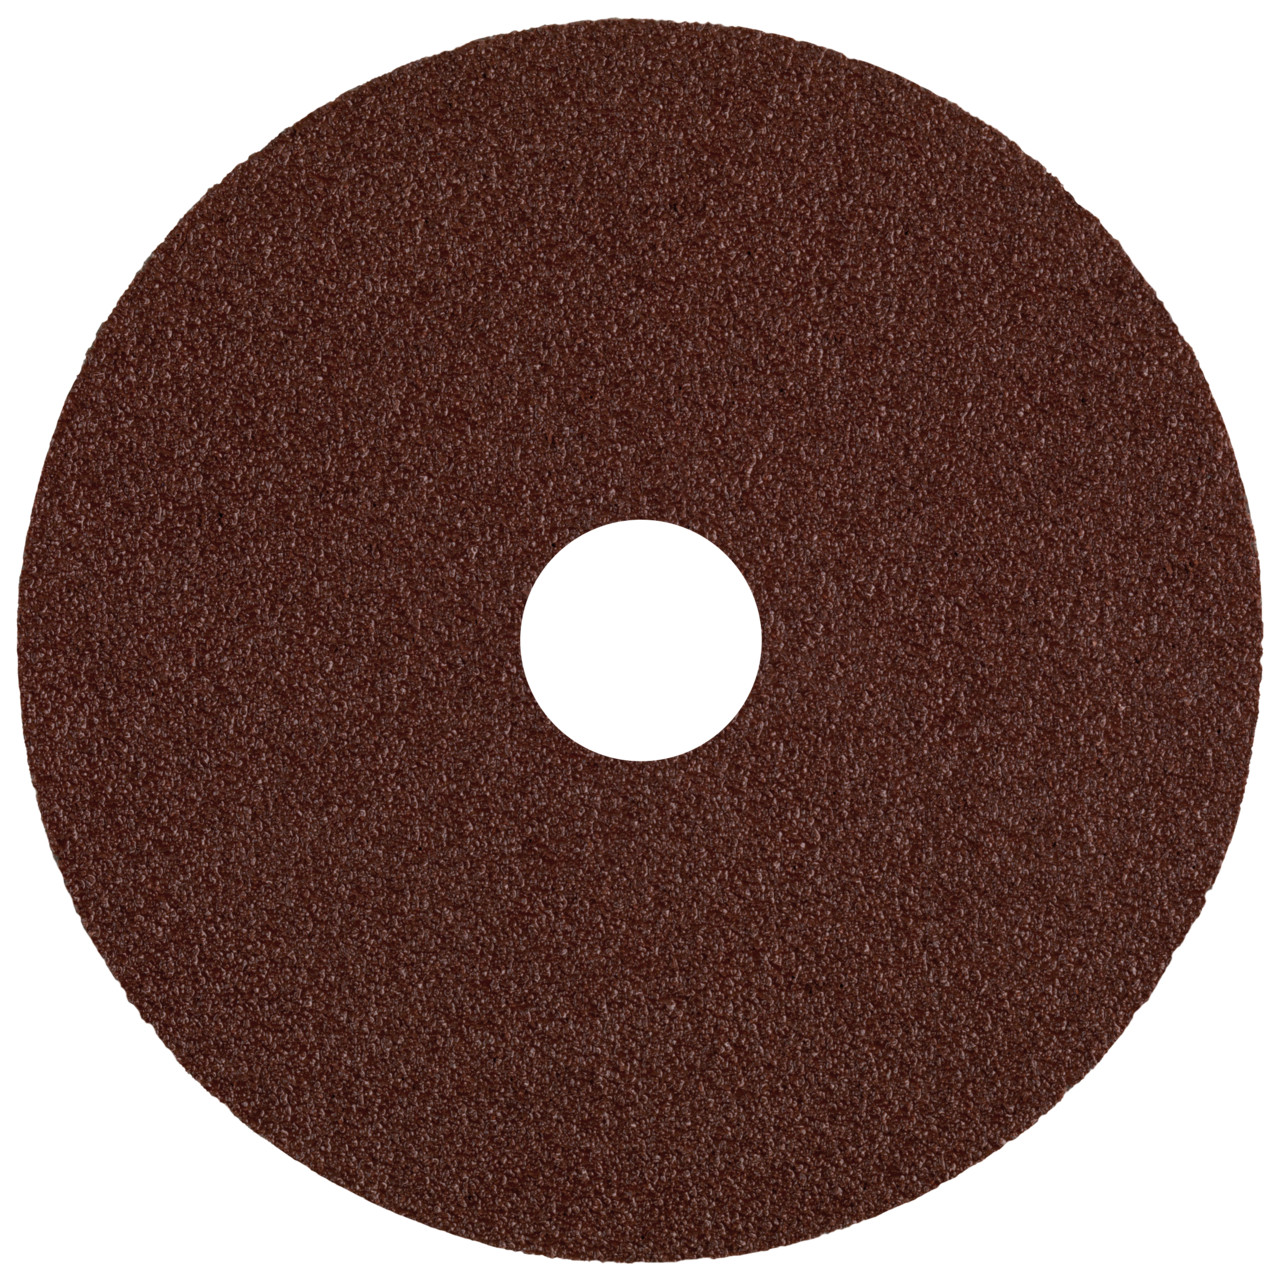 Tyrolit A-B02 V Vulcanised fibre disc DxH 125x22 For steel, non-ferrous metals and wood, P60, shape: DISC, Art. 34286502